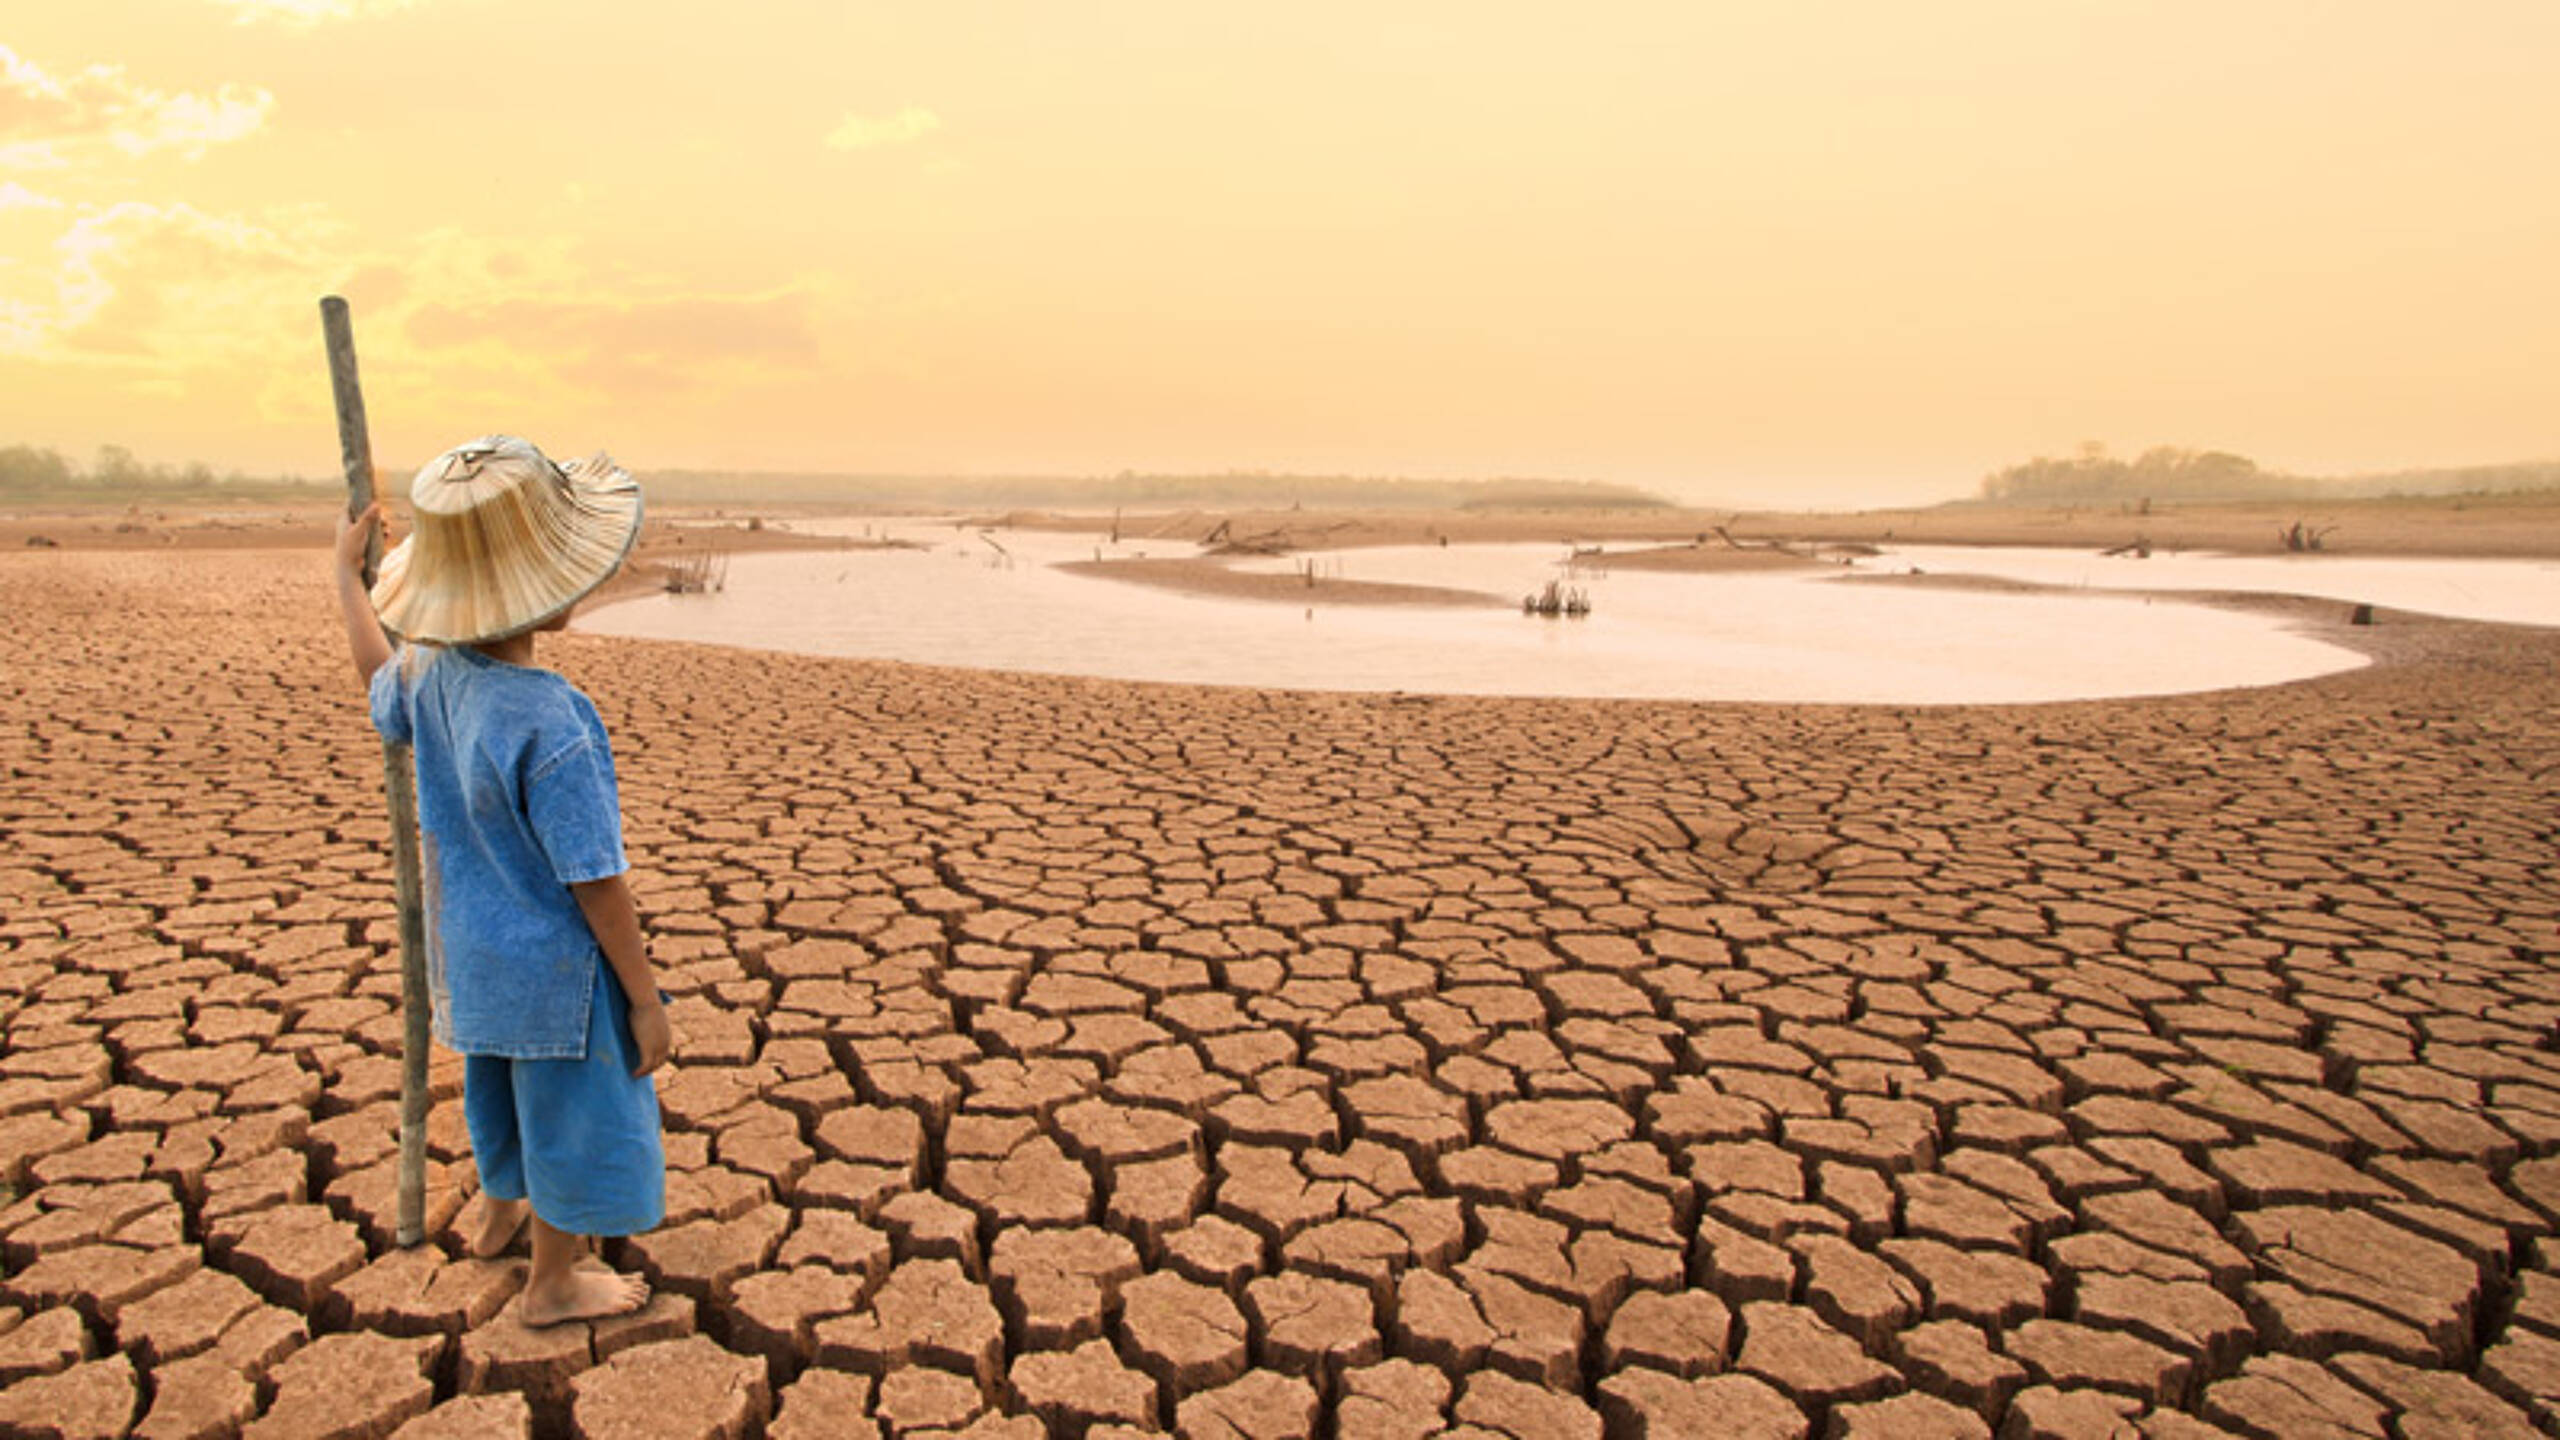 Report: Water crisis threatens $58trn in global economic value